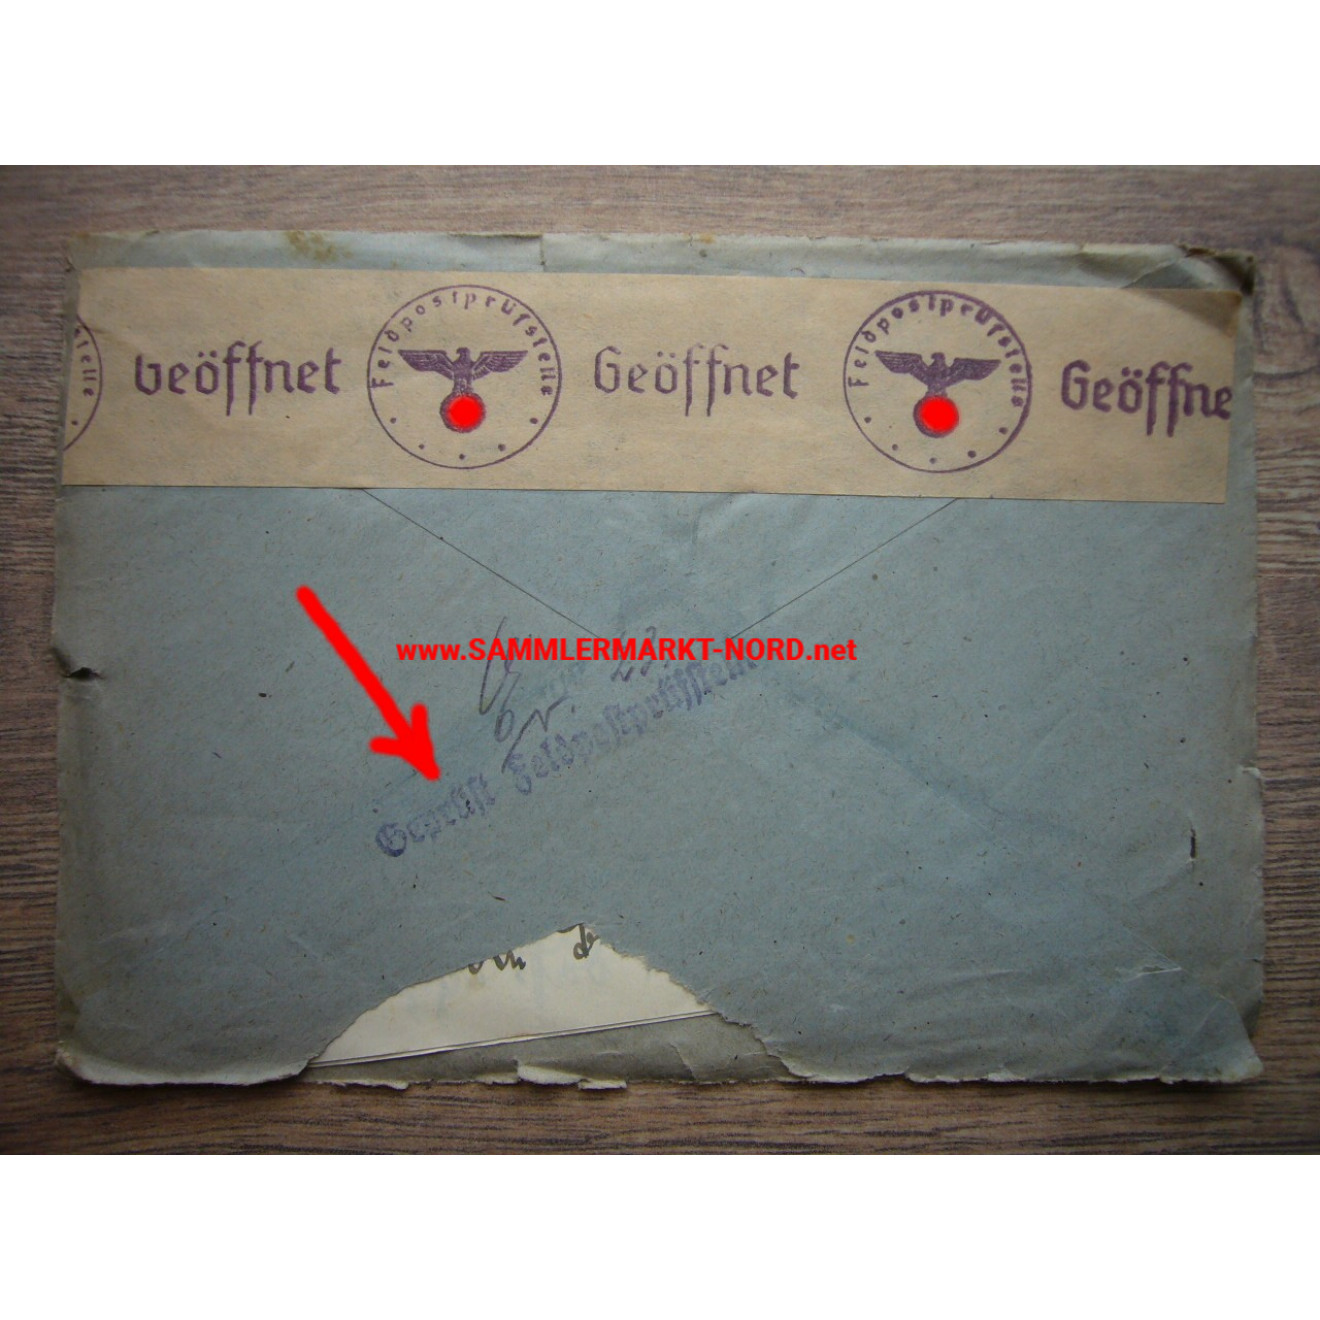 Field post letter 04.03.1944 - postmark "Geprüft Feldpostprüfstelle" ("Checked field post office")